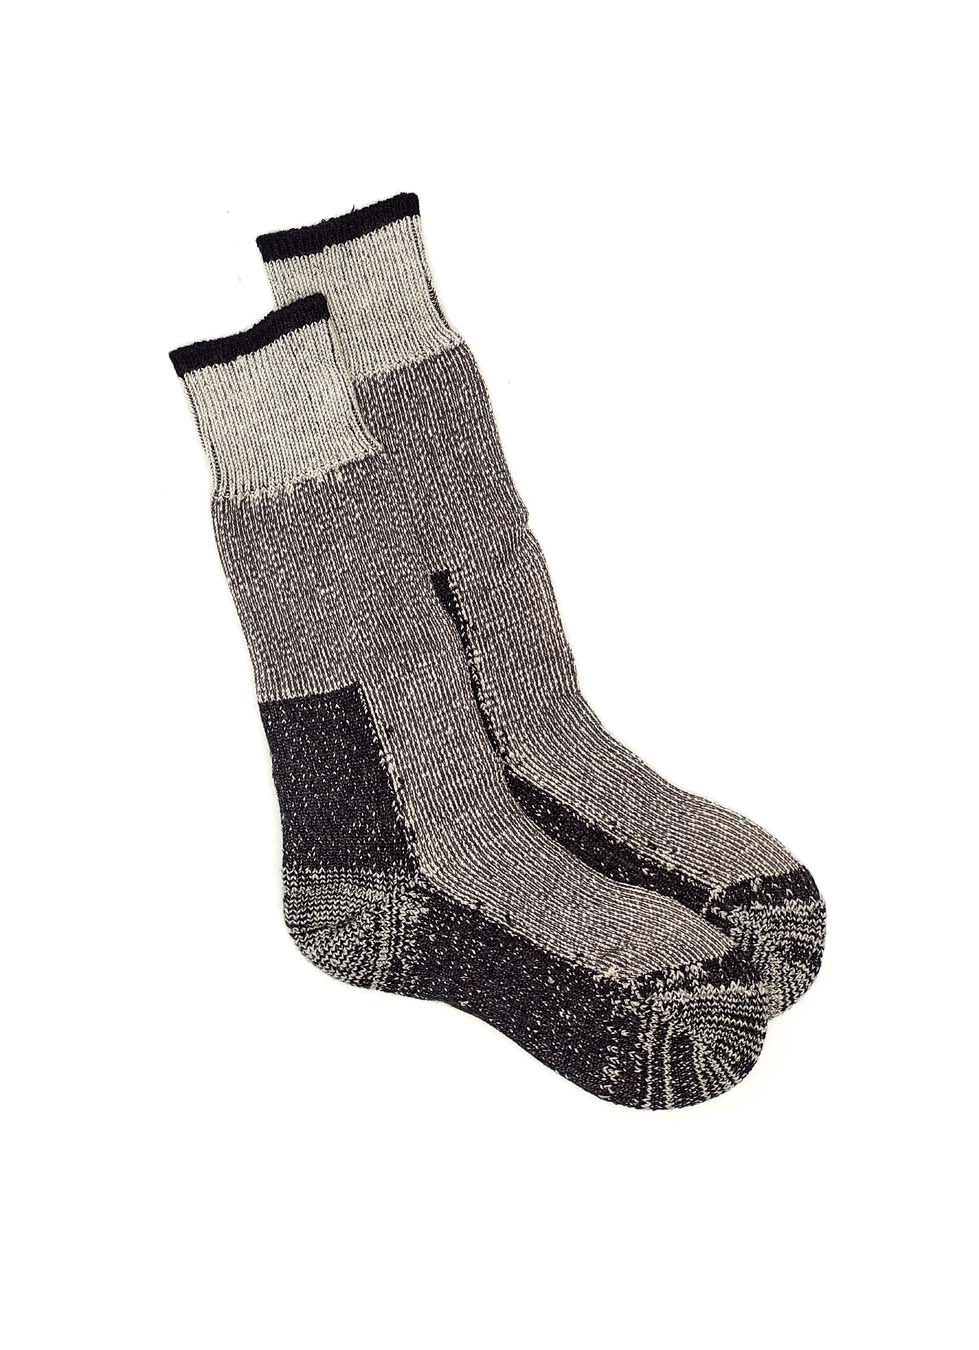 Gumboot Sock 3 Pack - Charcoal